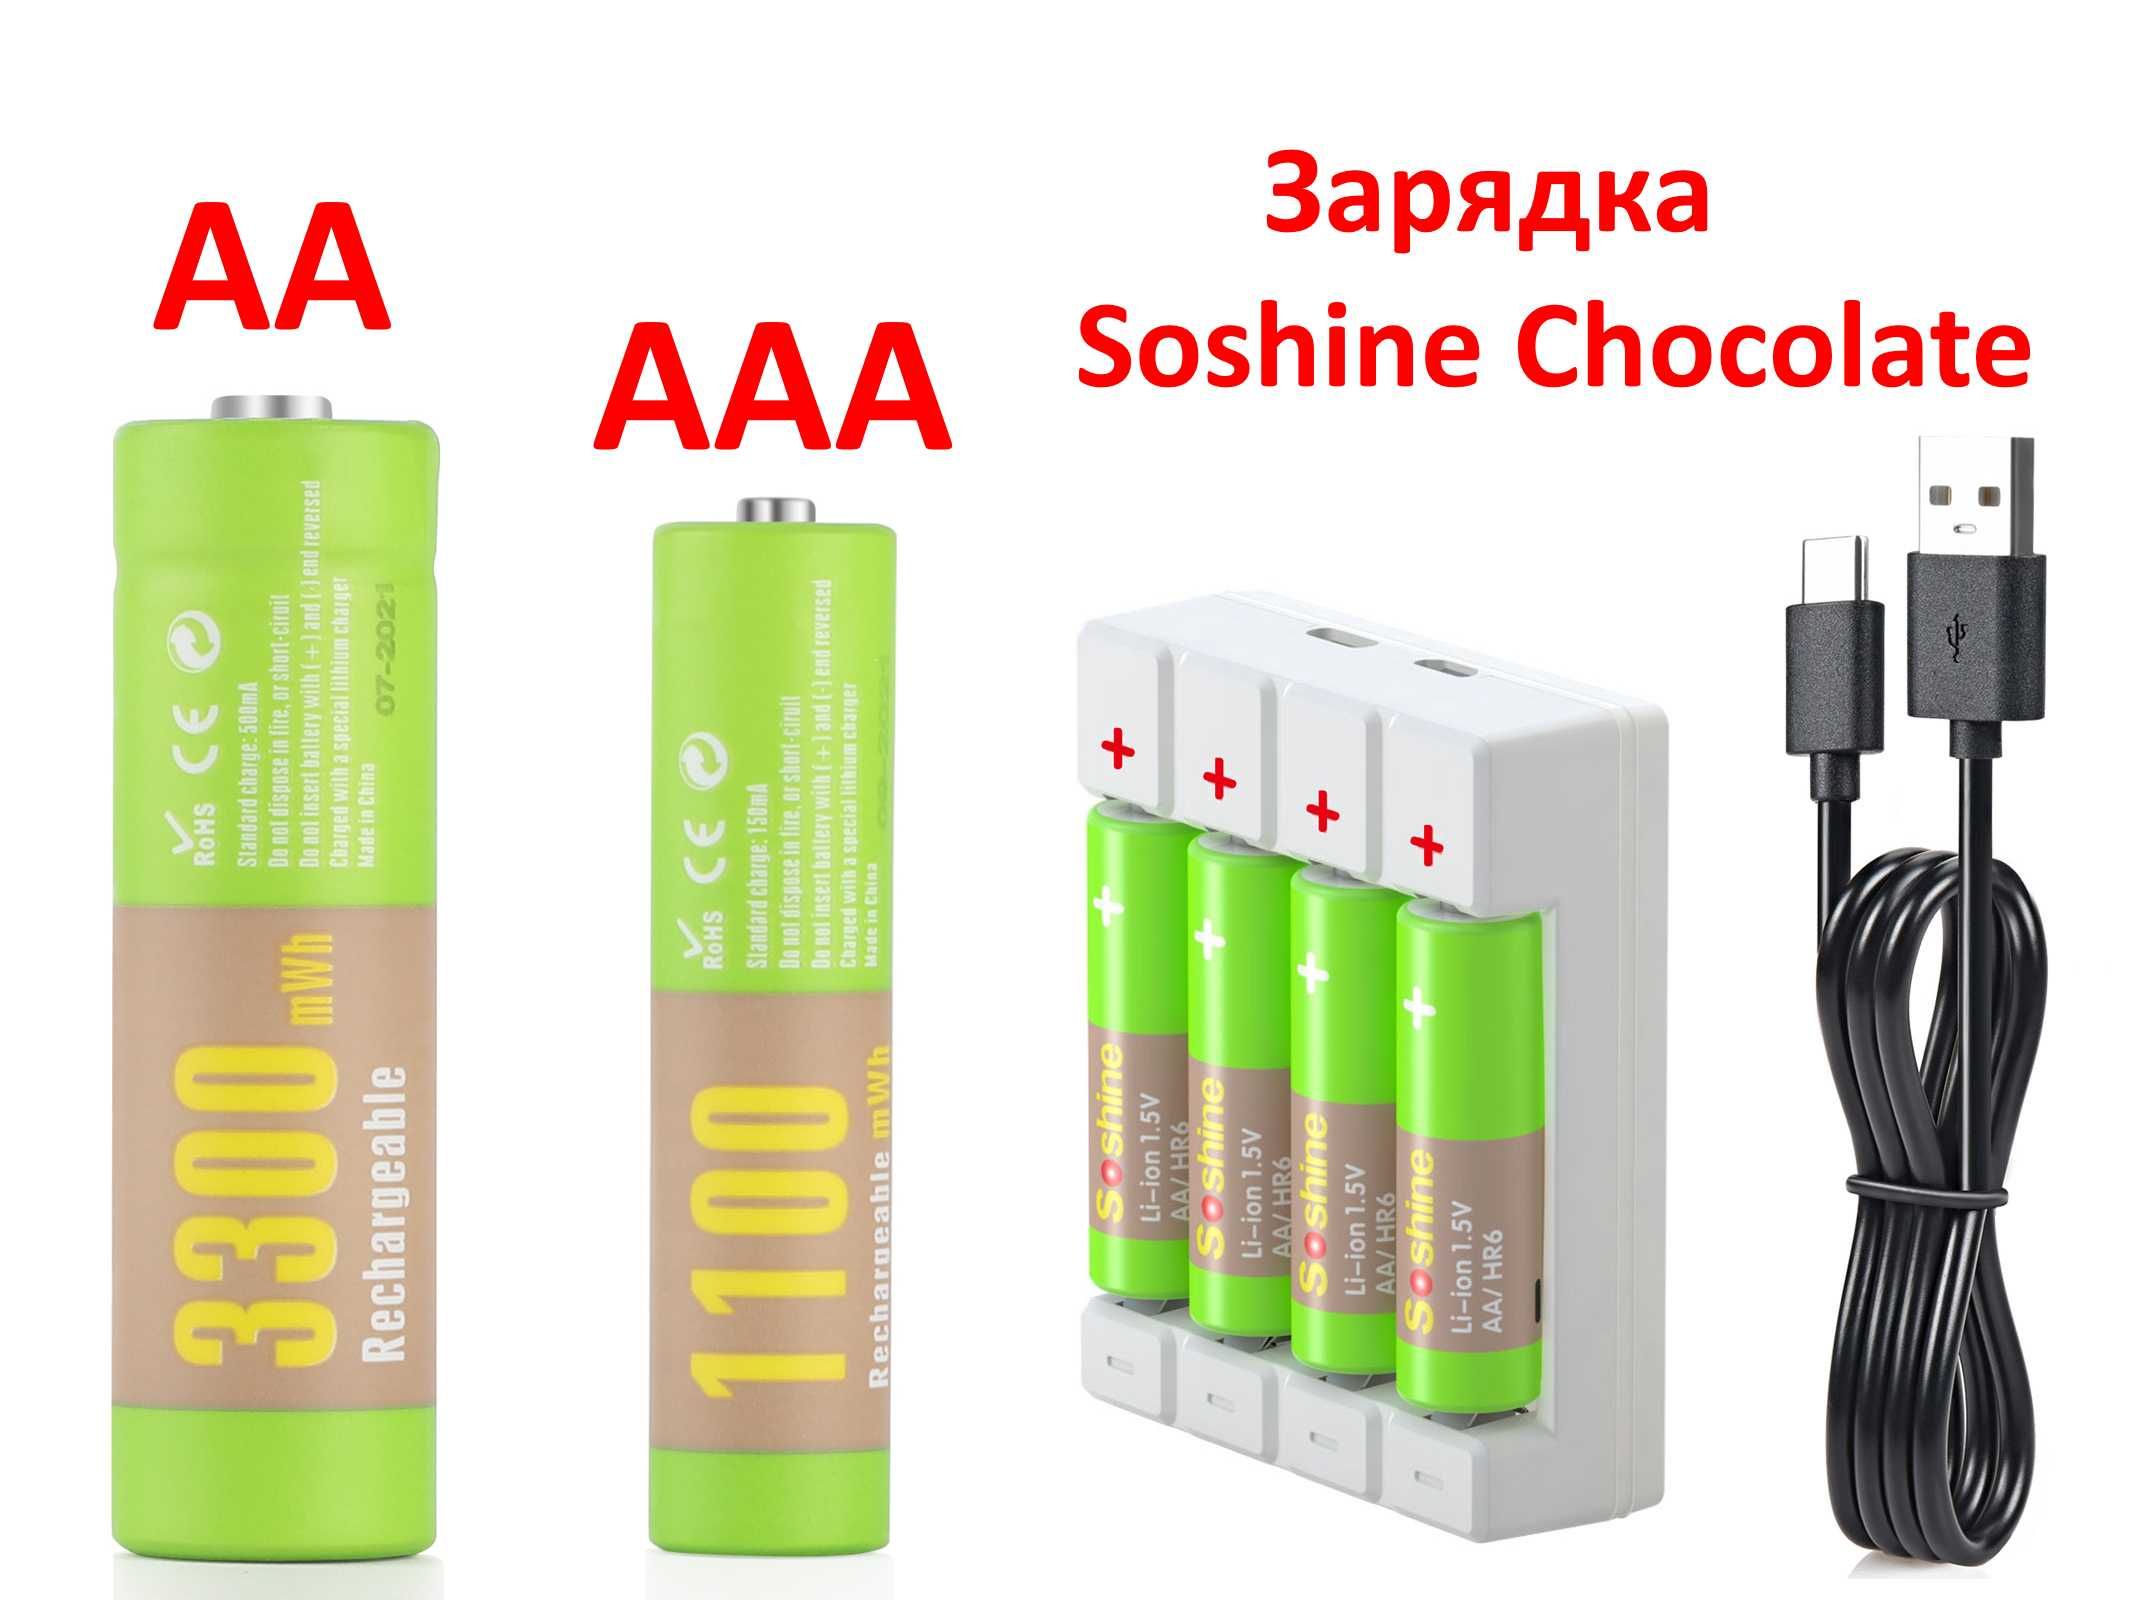 АКЦІЯ! Акумулятор Soshine AA AAA 1.5V Li-ion зарядка Chocolate